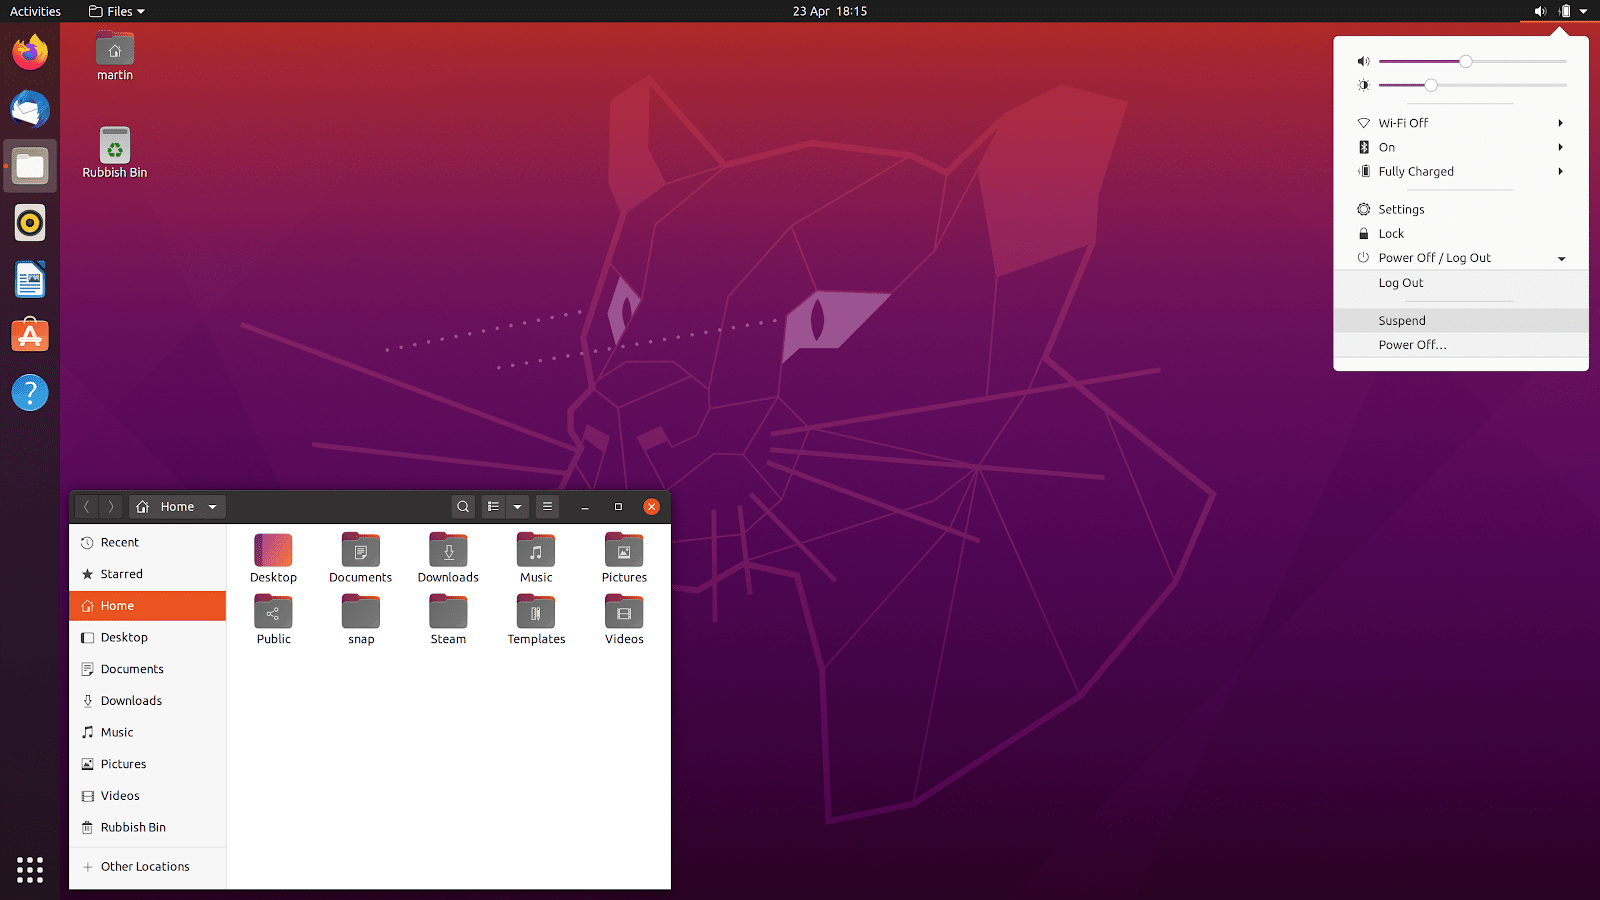 slack download for ubuntu 20.04